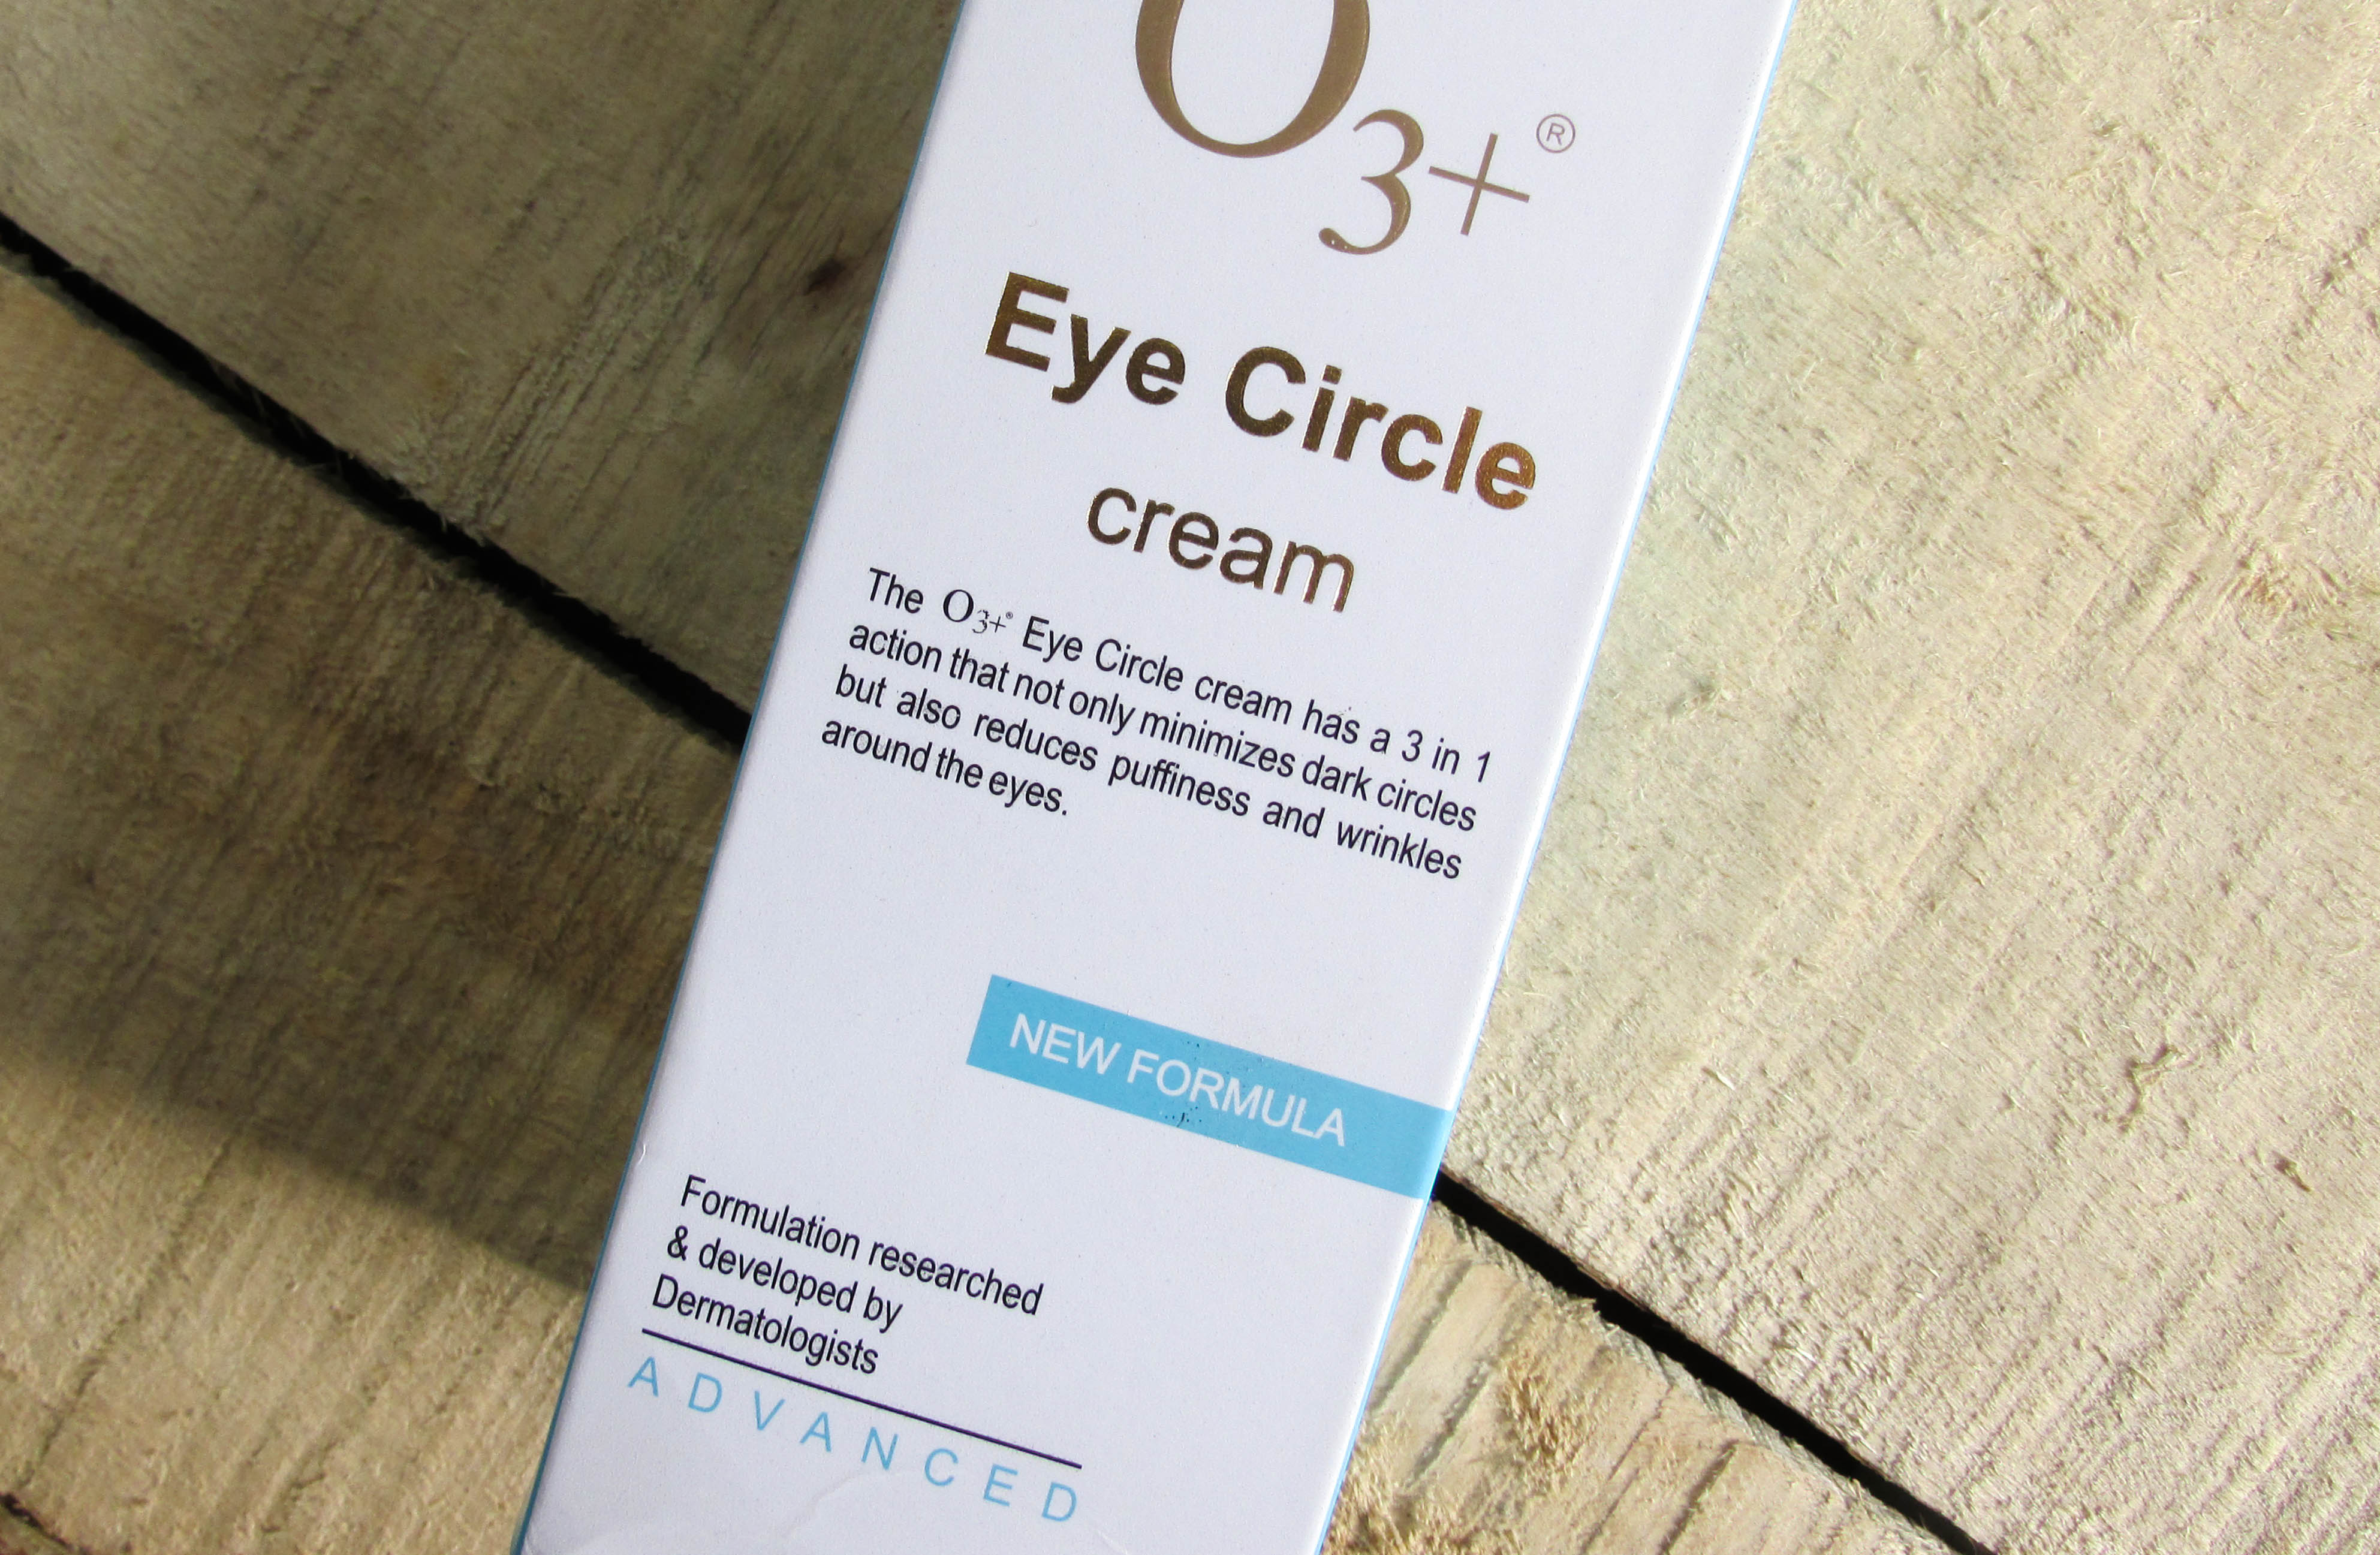 O3+ Eye Circle Cream Review | Cherry On Top